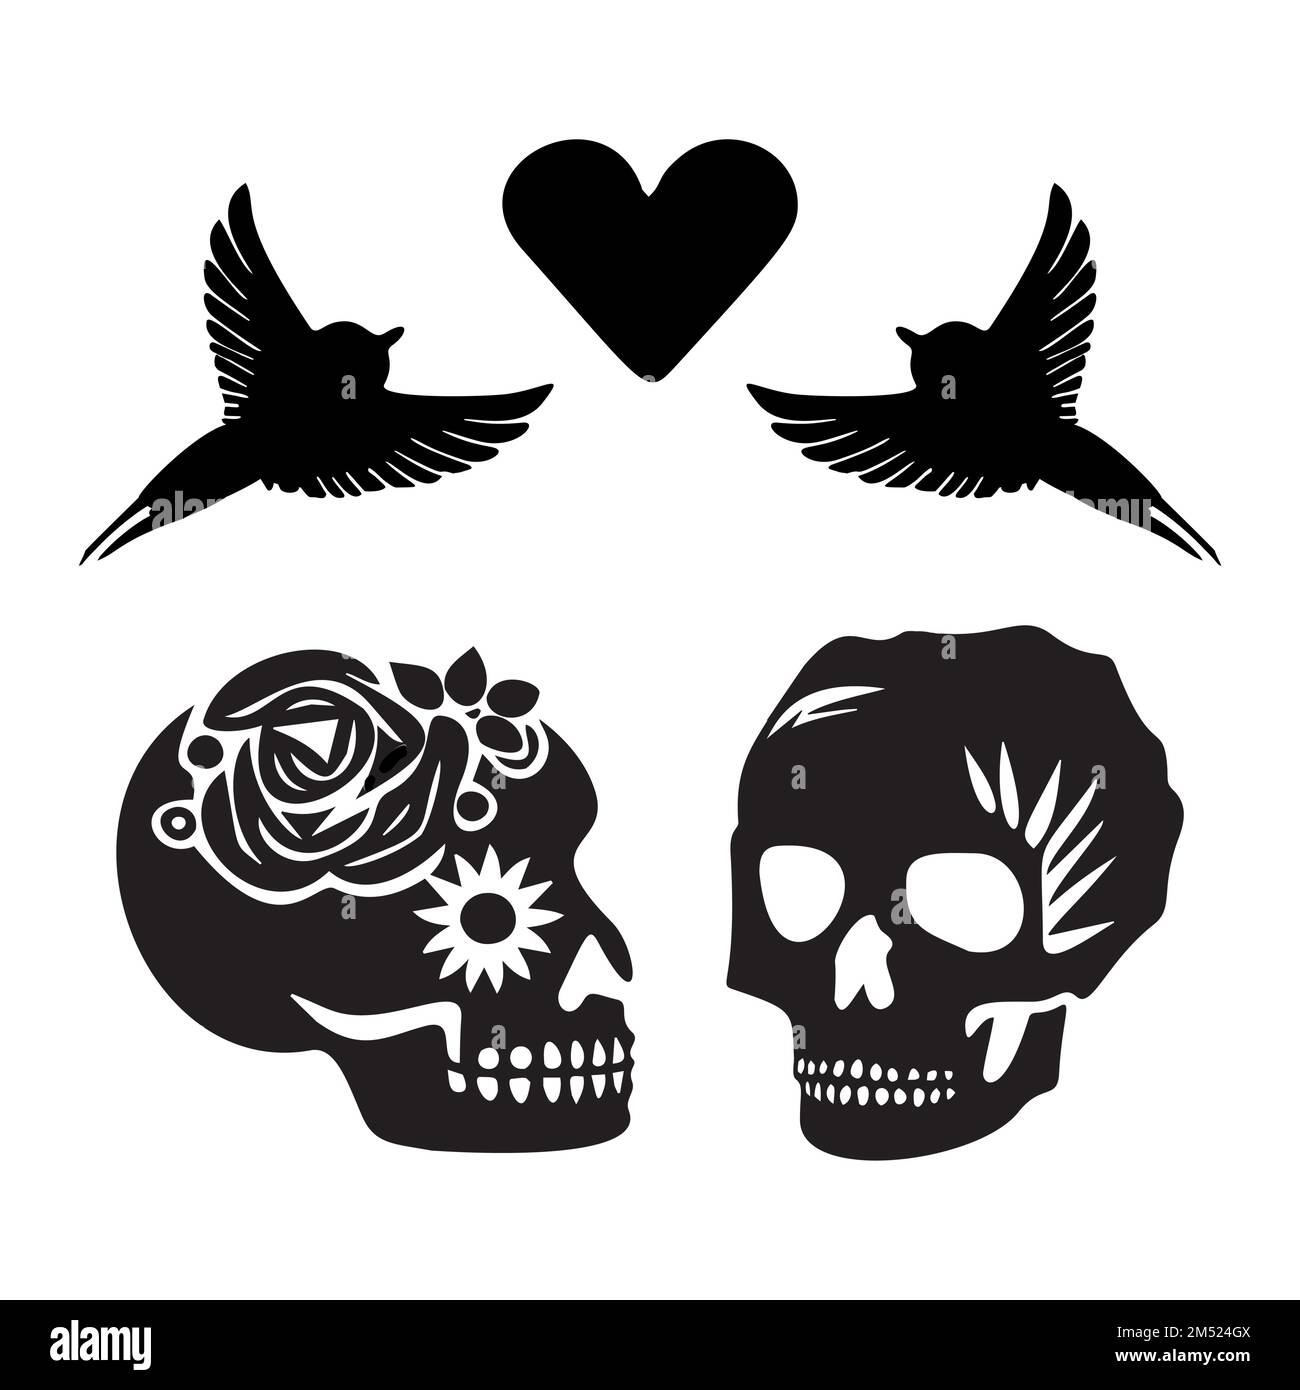 70 Skeleton Couple Tattoo Illustrations RoyaltyFree Vector Graphics   Clip Art  iStock